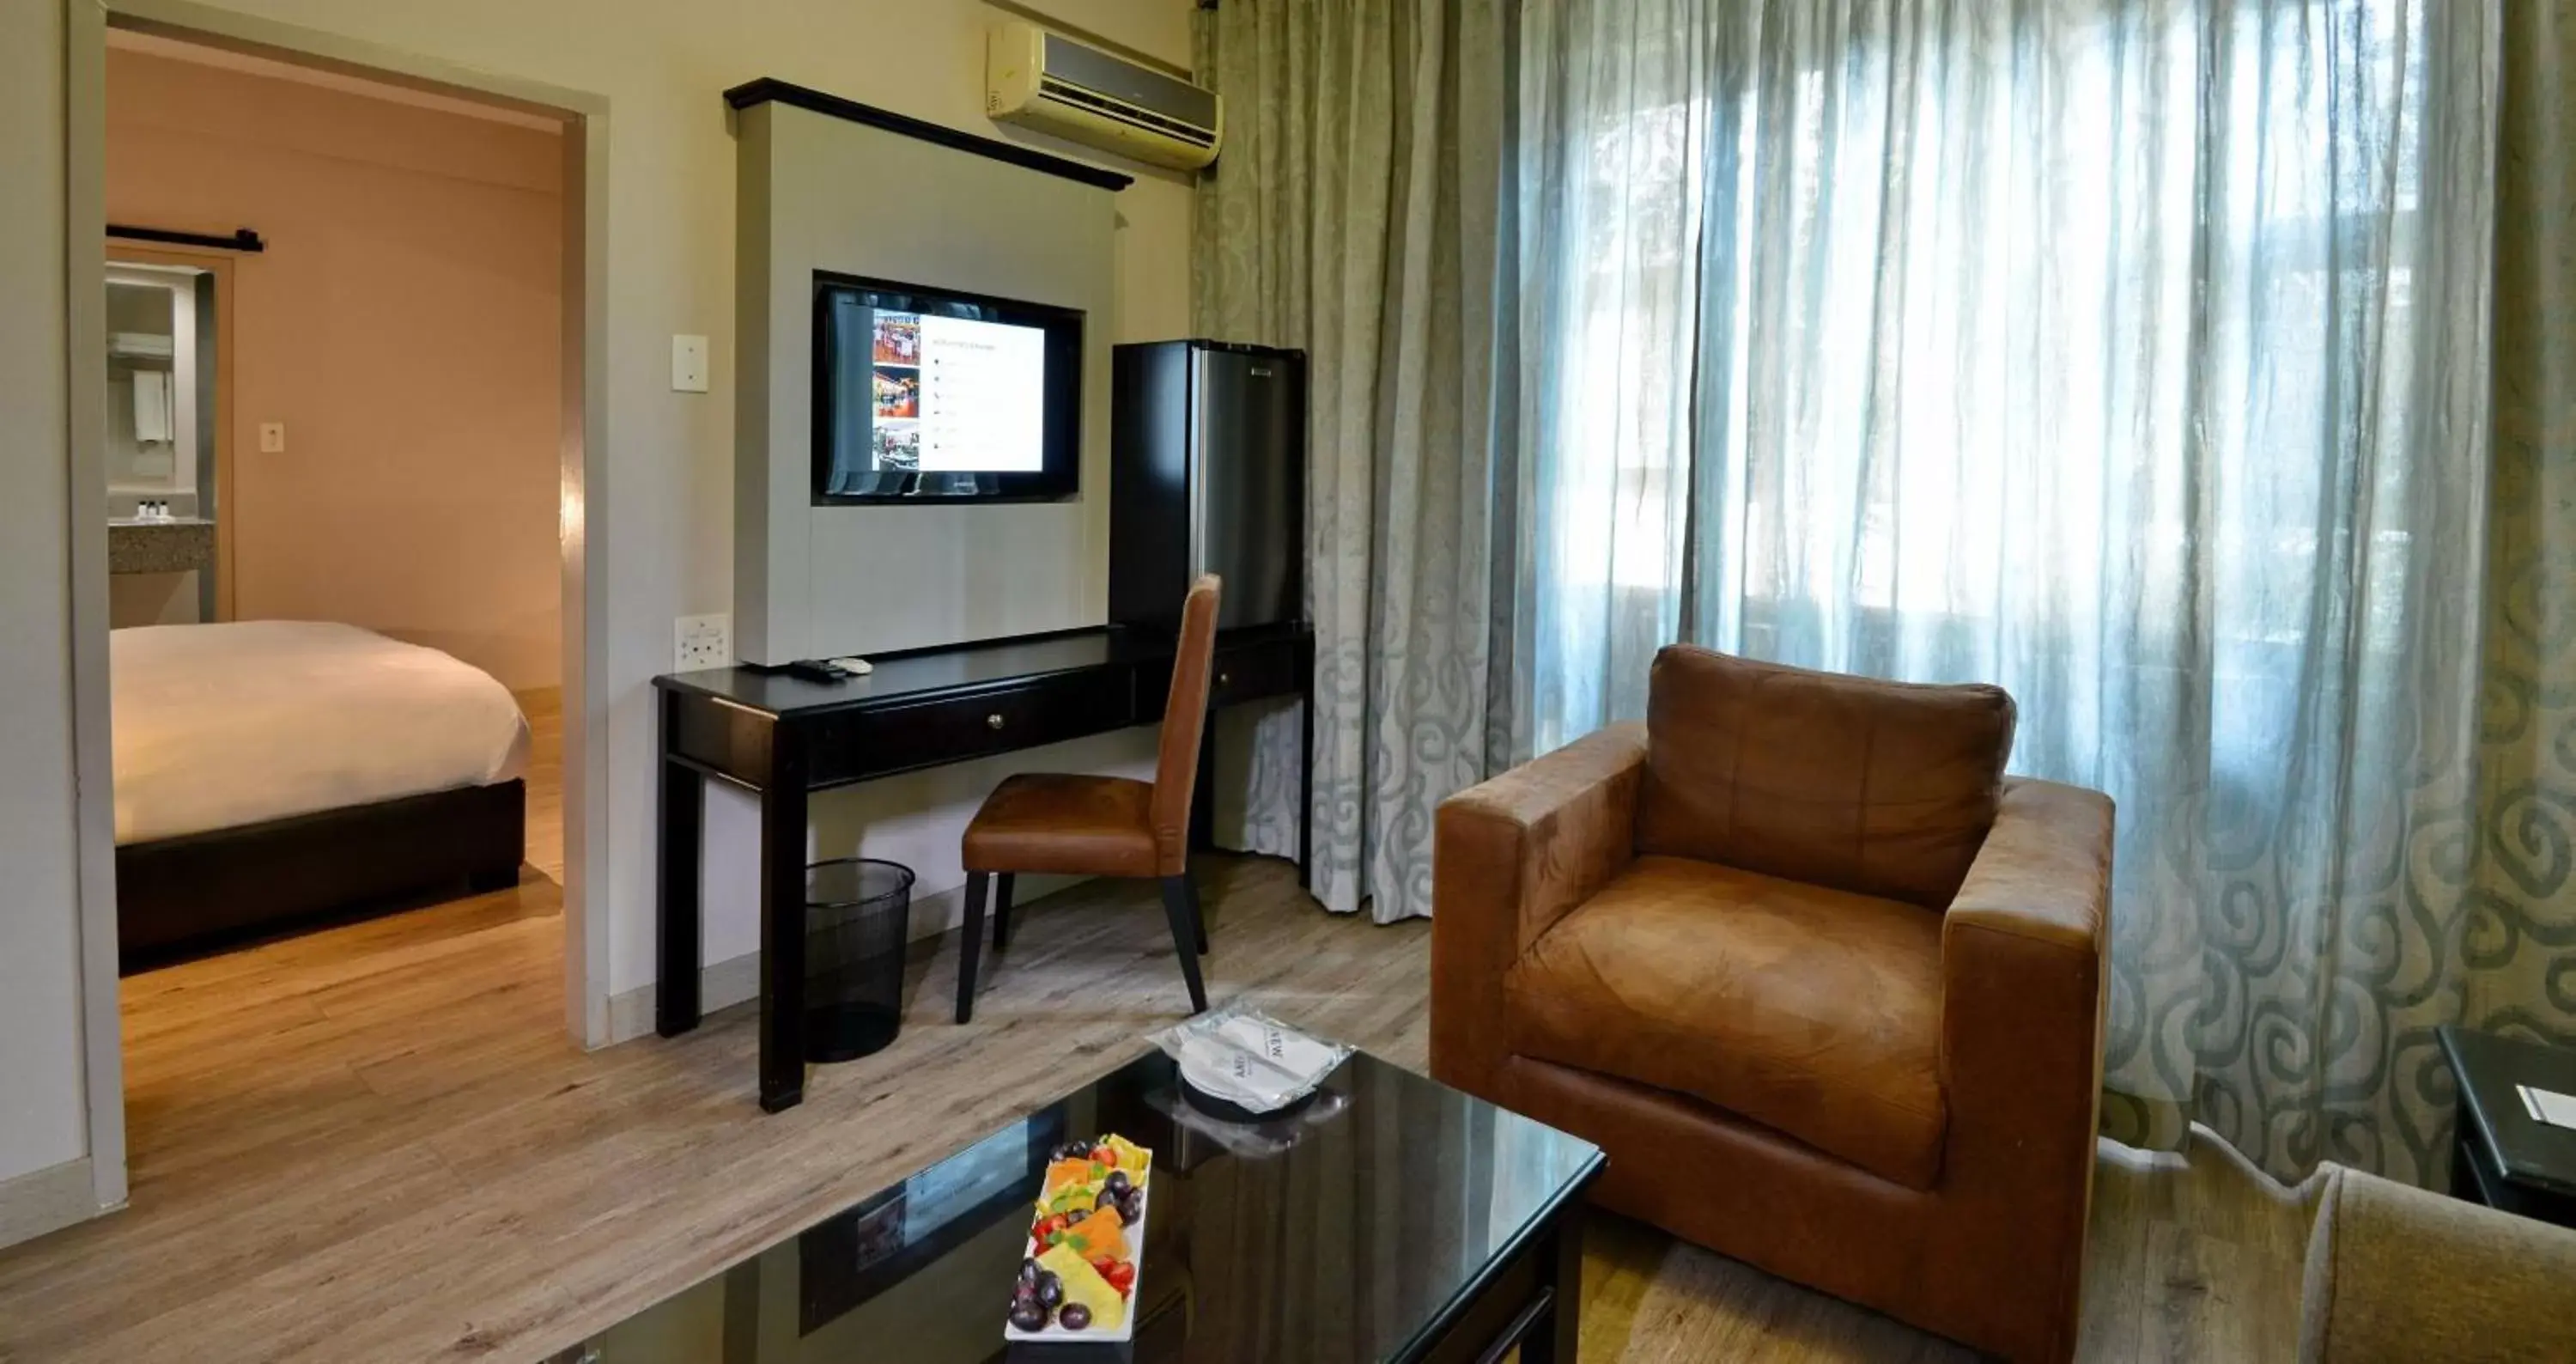 TV and multimedia, Seating Area in ANEW Hotel Capital Pretoria